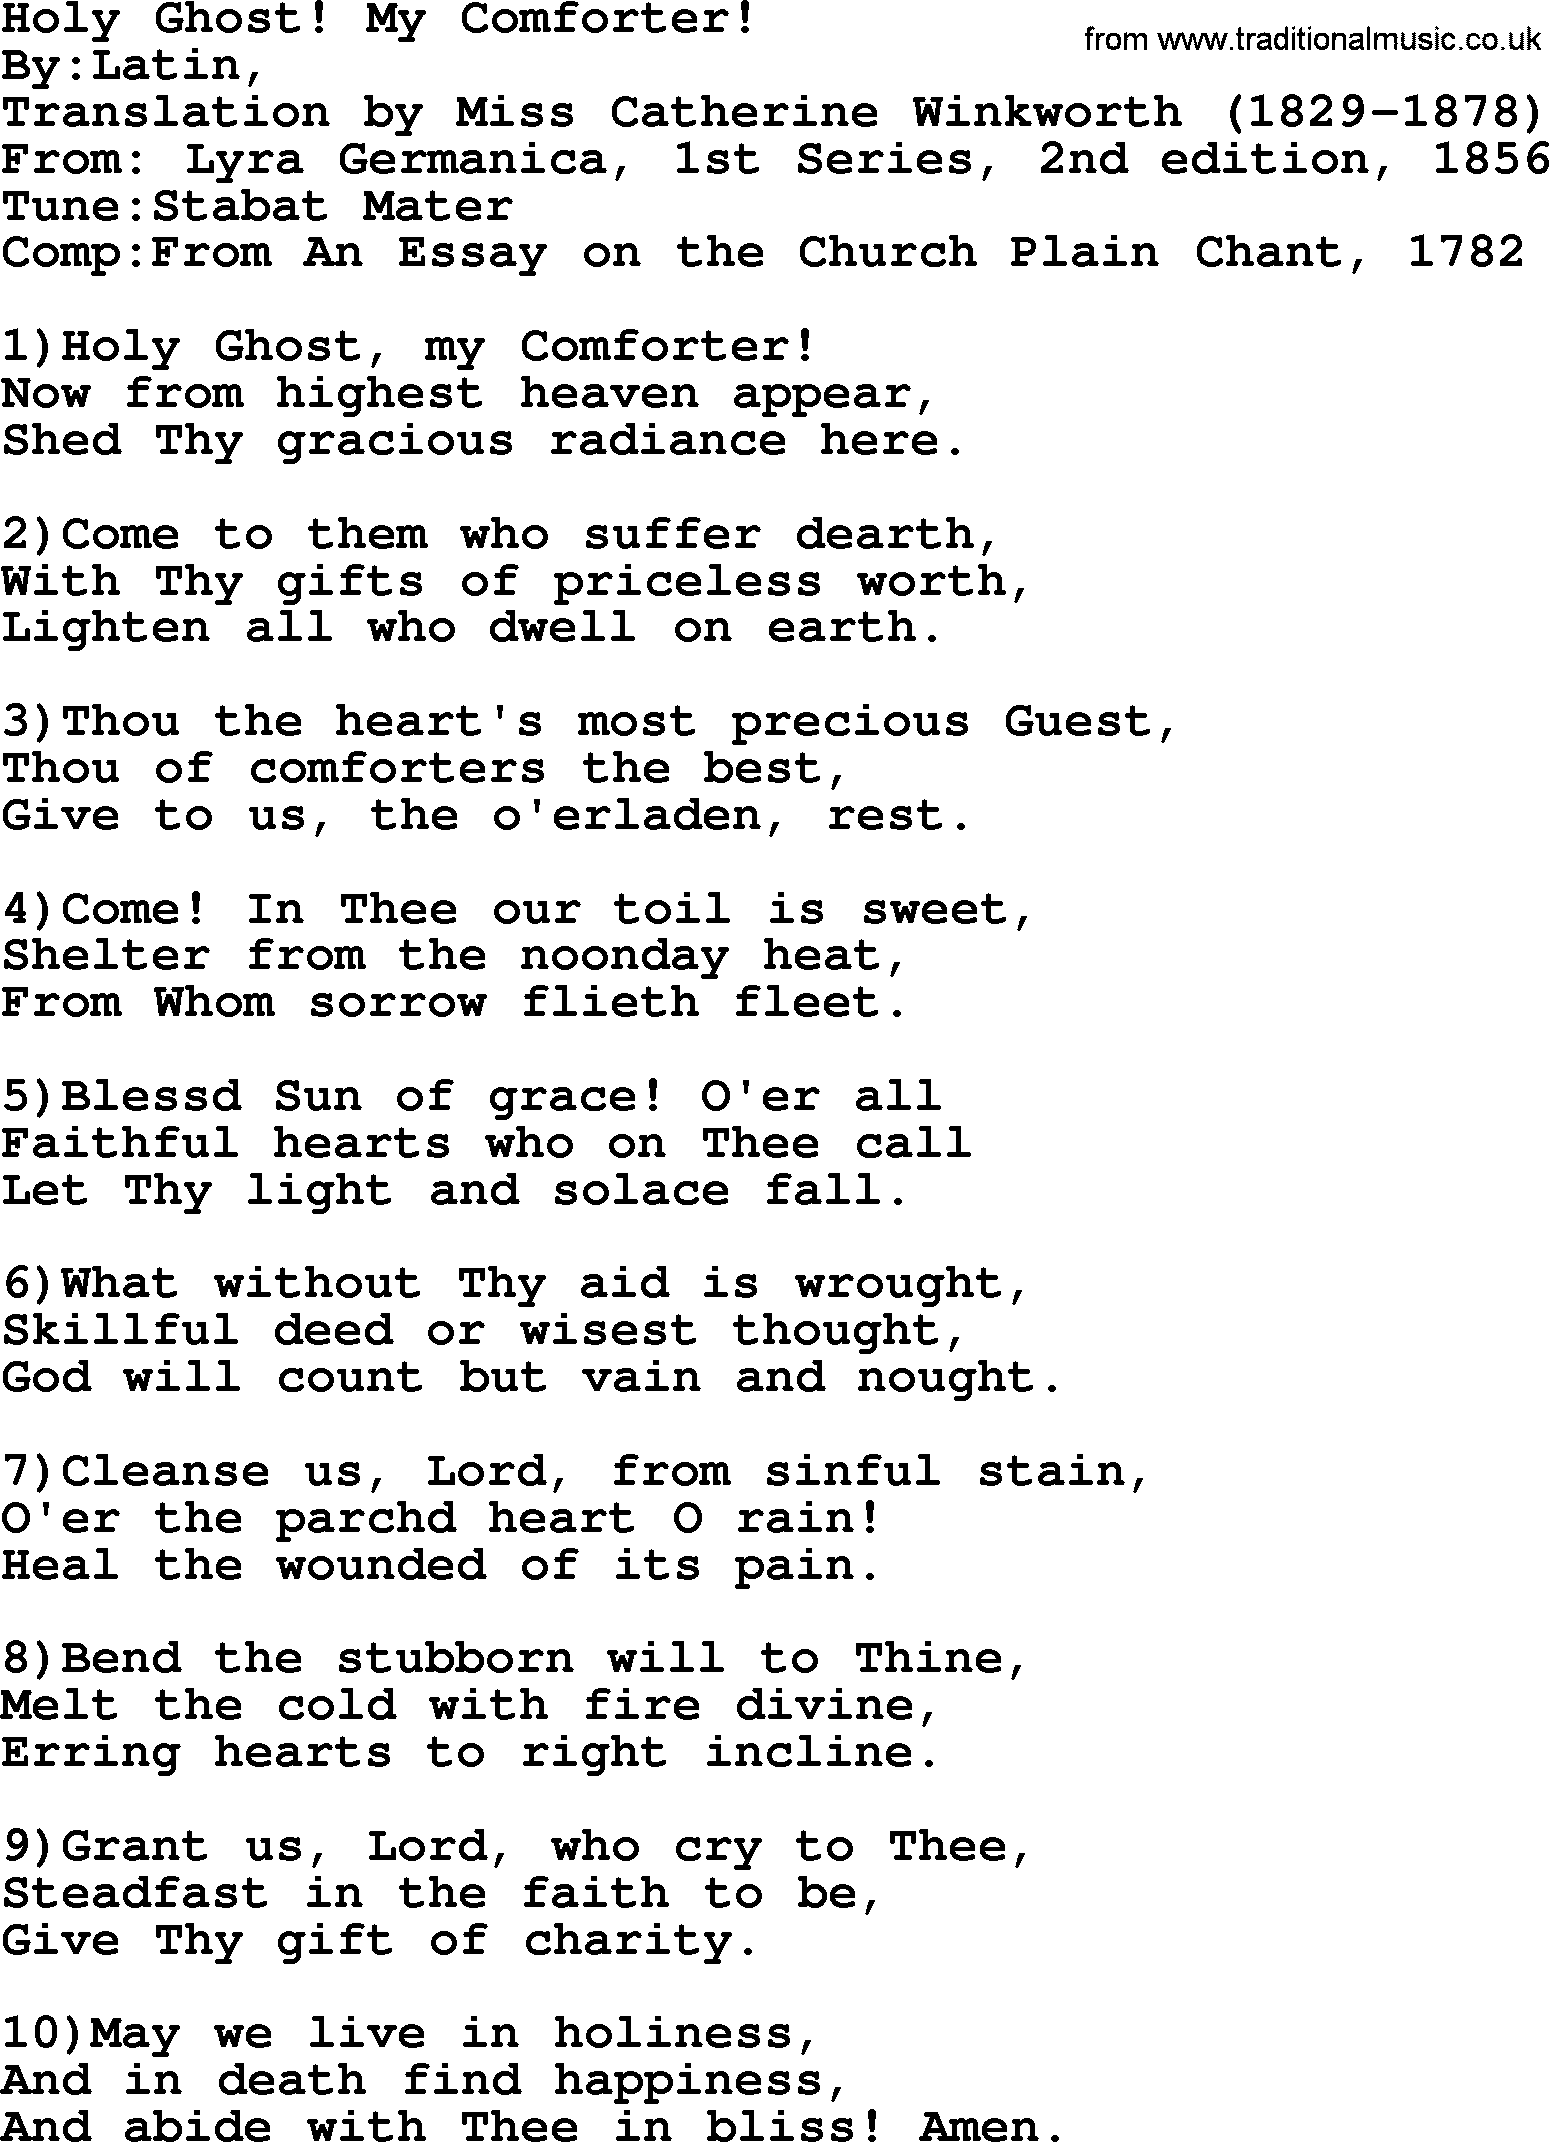 Methodist Hymn: Holy Ghost! My Comforter!, lyrics